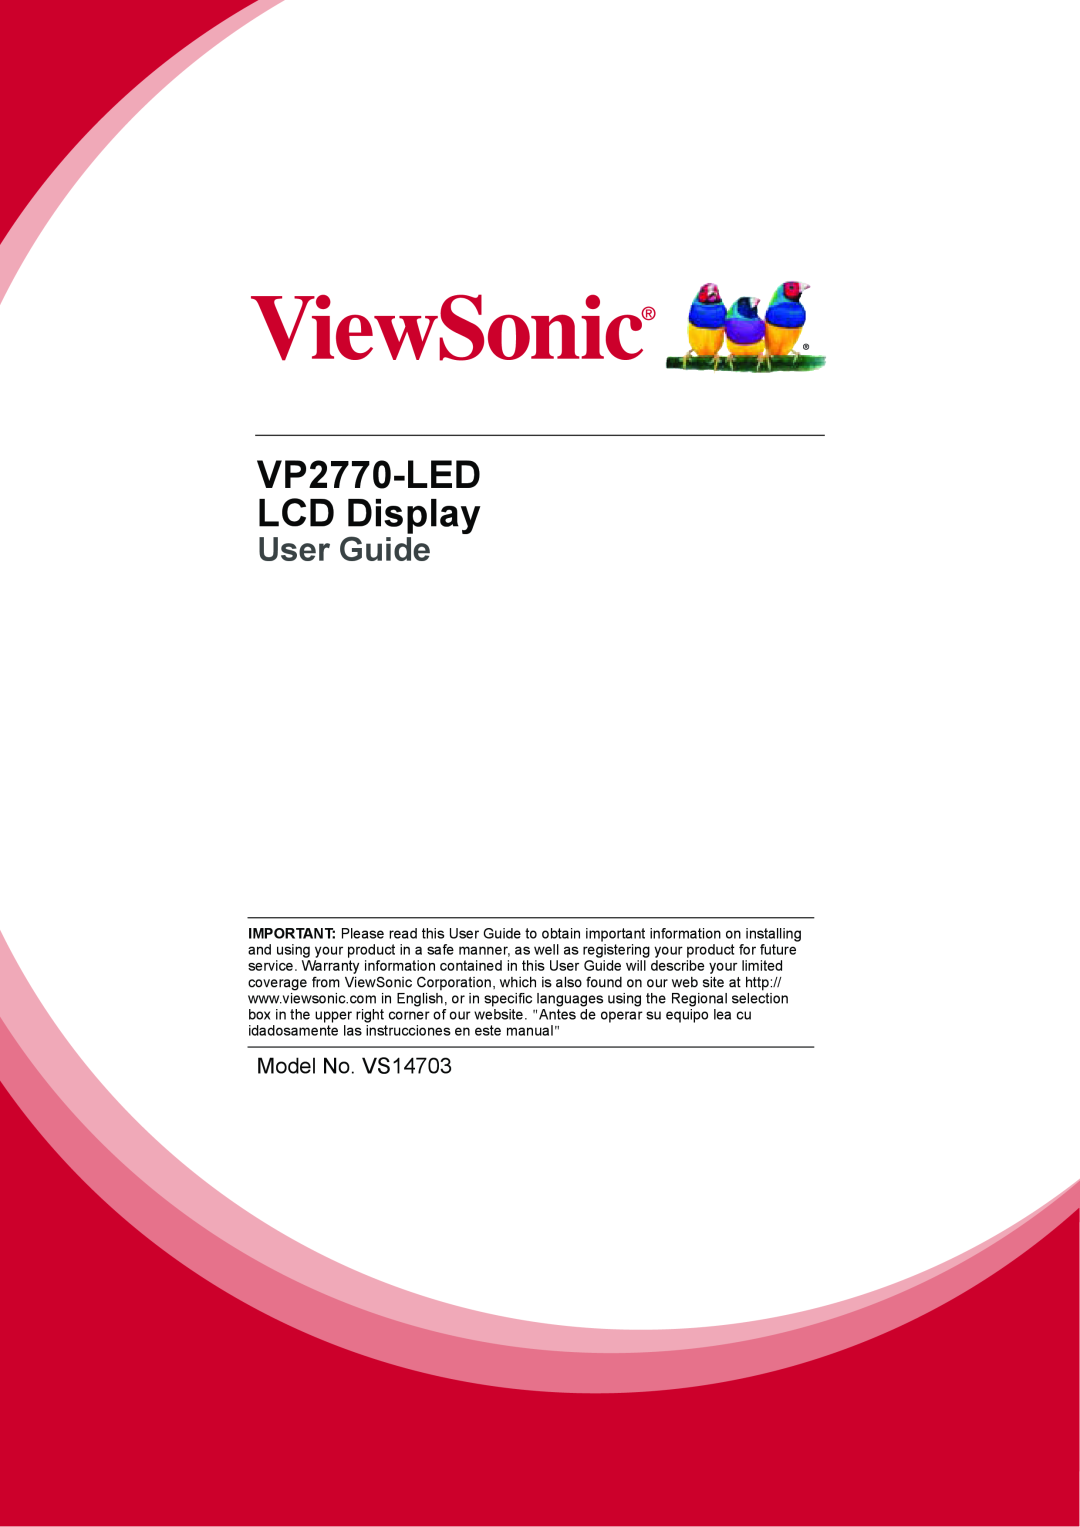 ViewSonic VP2770LED warranty VP2770-LED LCD Display, User Guide 